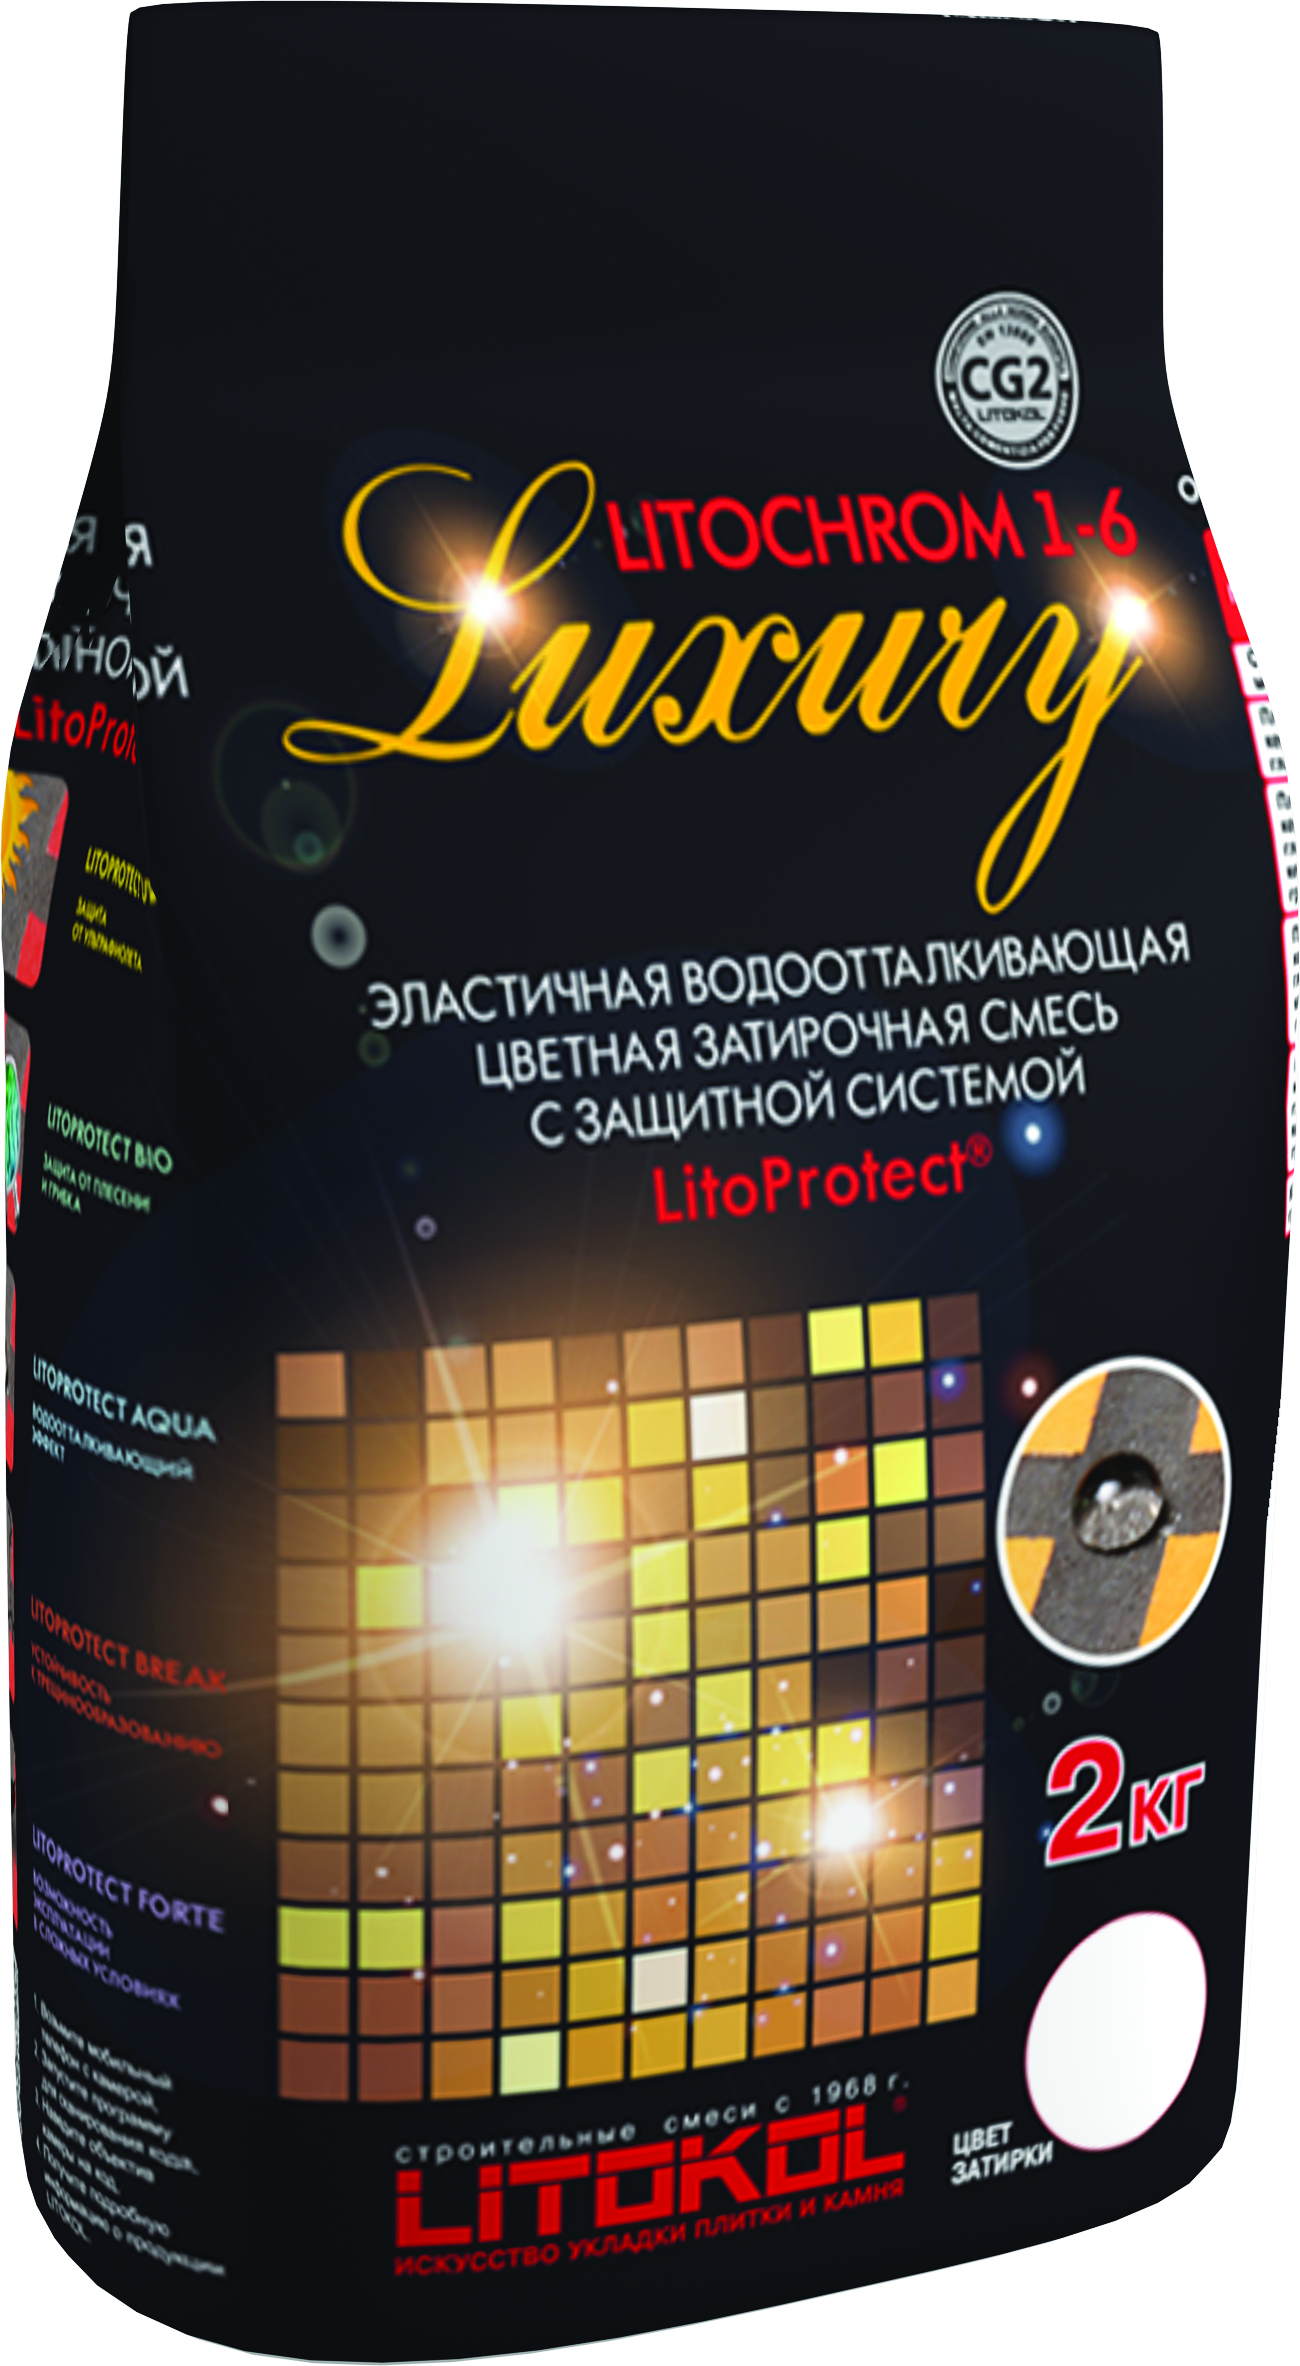 Купить Litokol Litochrom 1-6 Luxury C.660, 2 кг